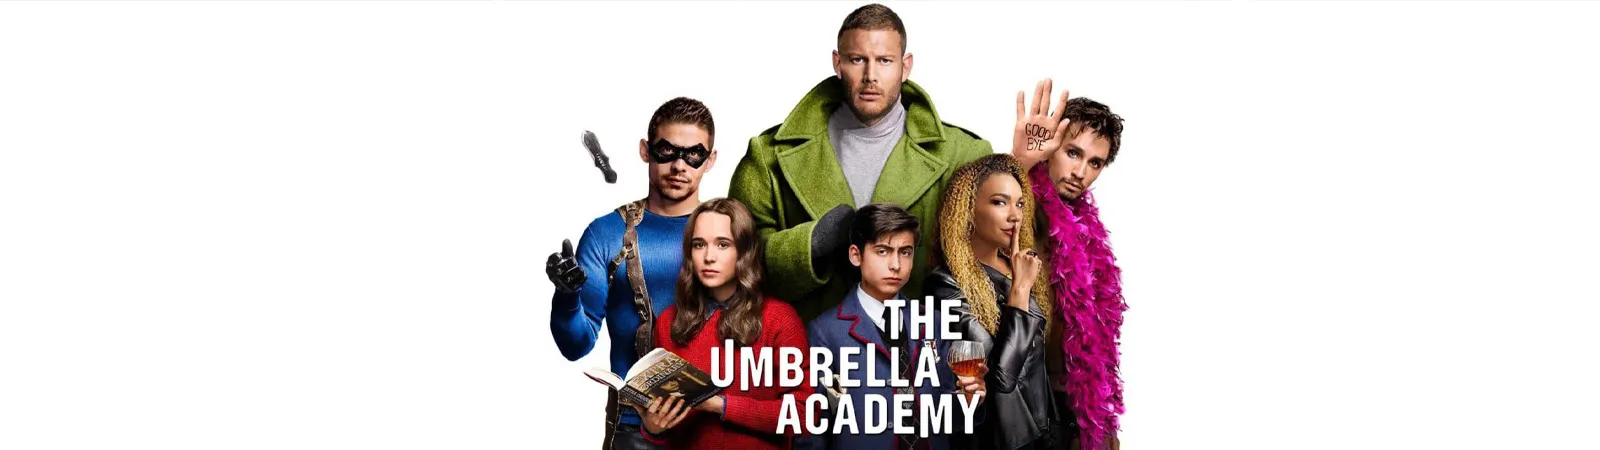 5. The Umbrella Academy